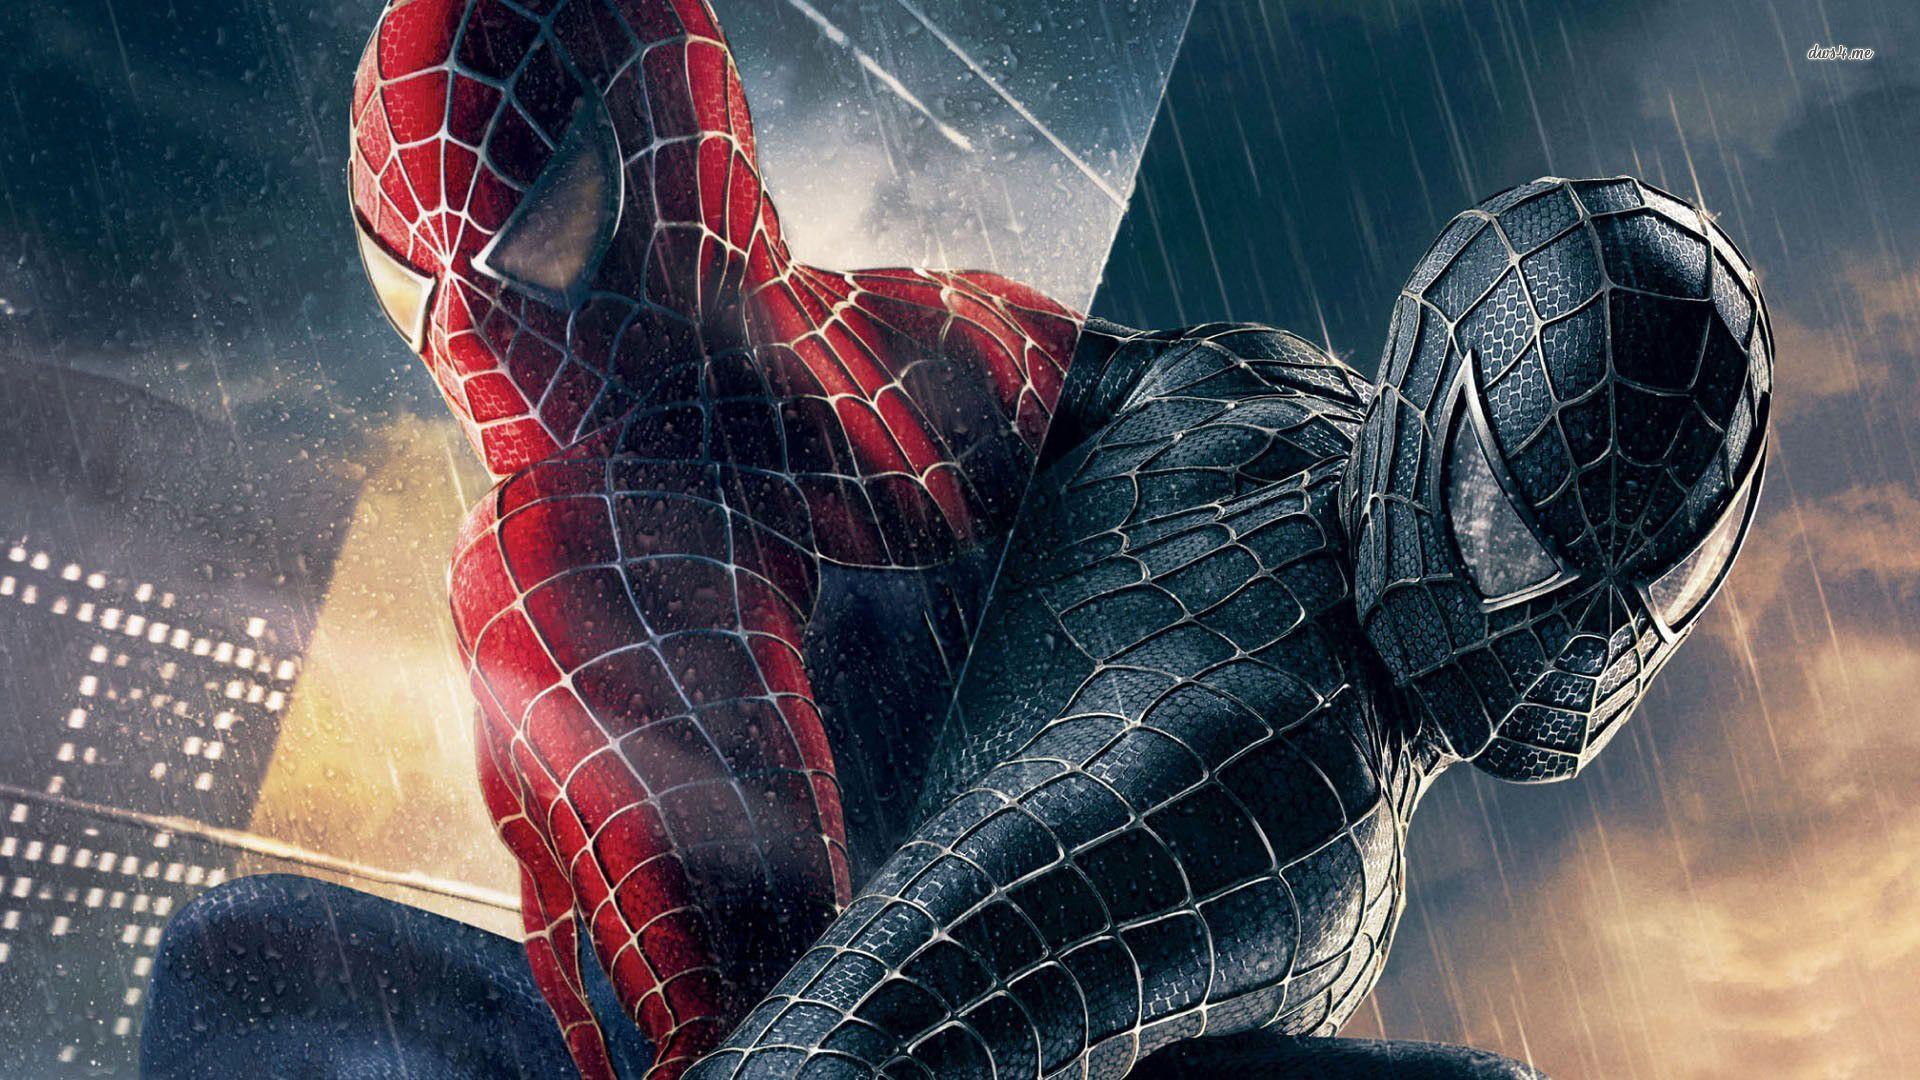 Images: Black Spiderman 3 HD Wallpaper